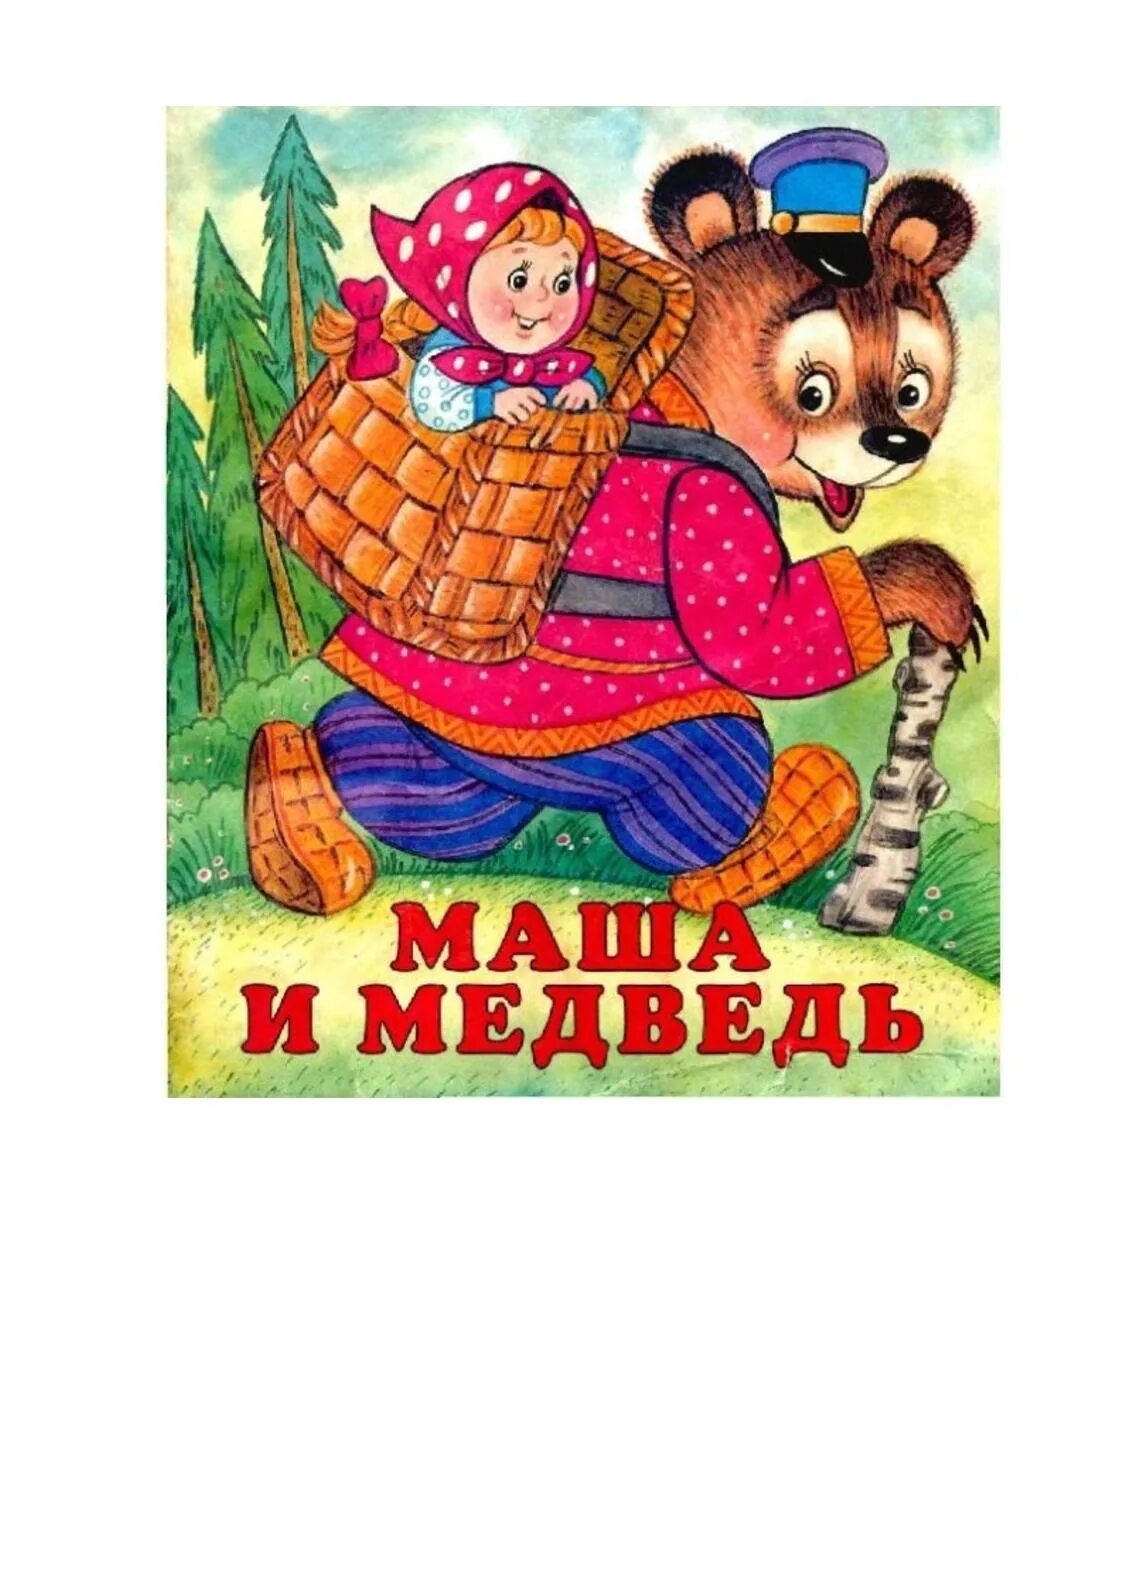 Тема сказки маша и медведь. Маша и медведь сказка книга. Книга Маша и медведь русская народная сказка. Иллюстрации к сказке Маша и медведь. Сказка Маша и медведь книжка.